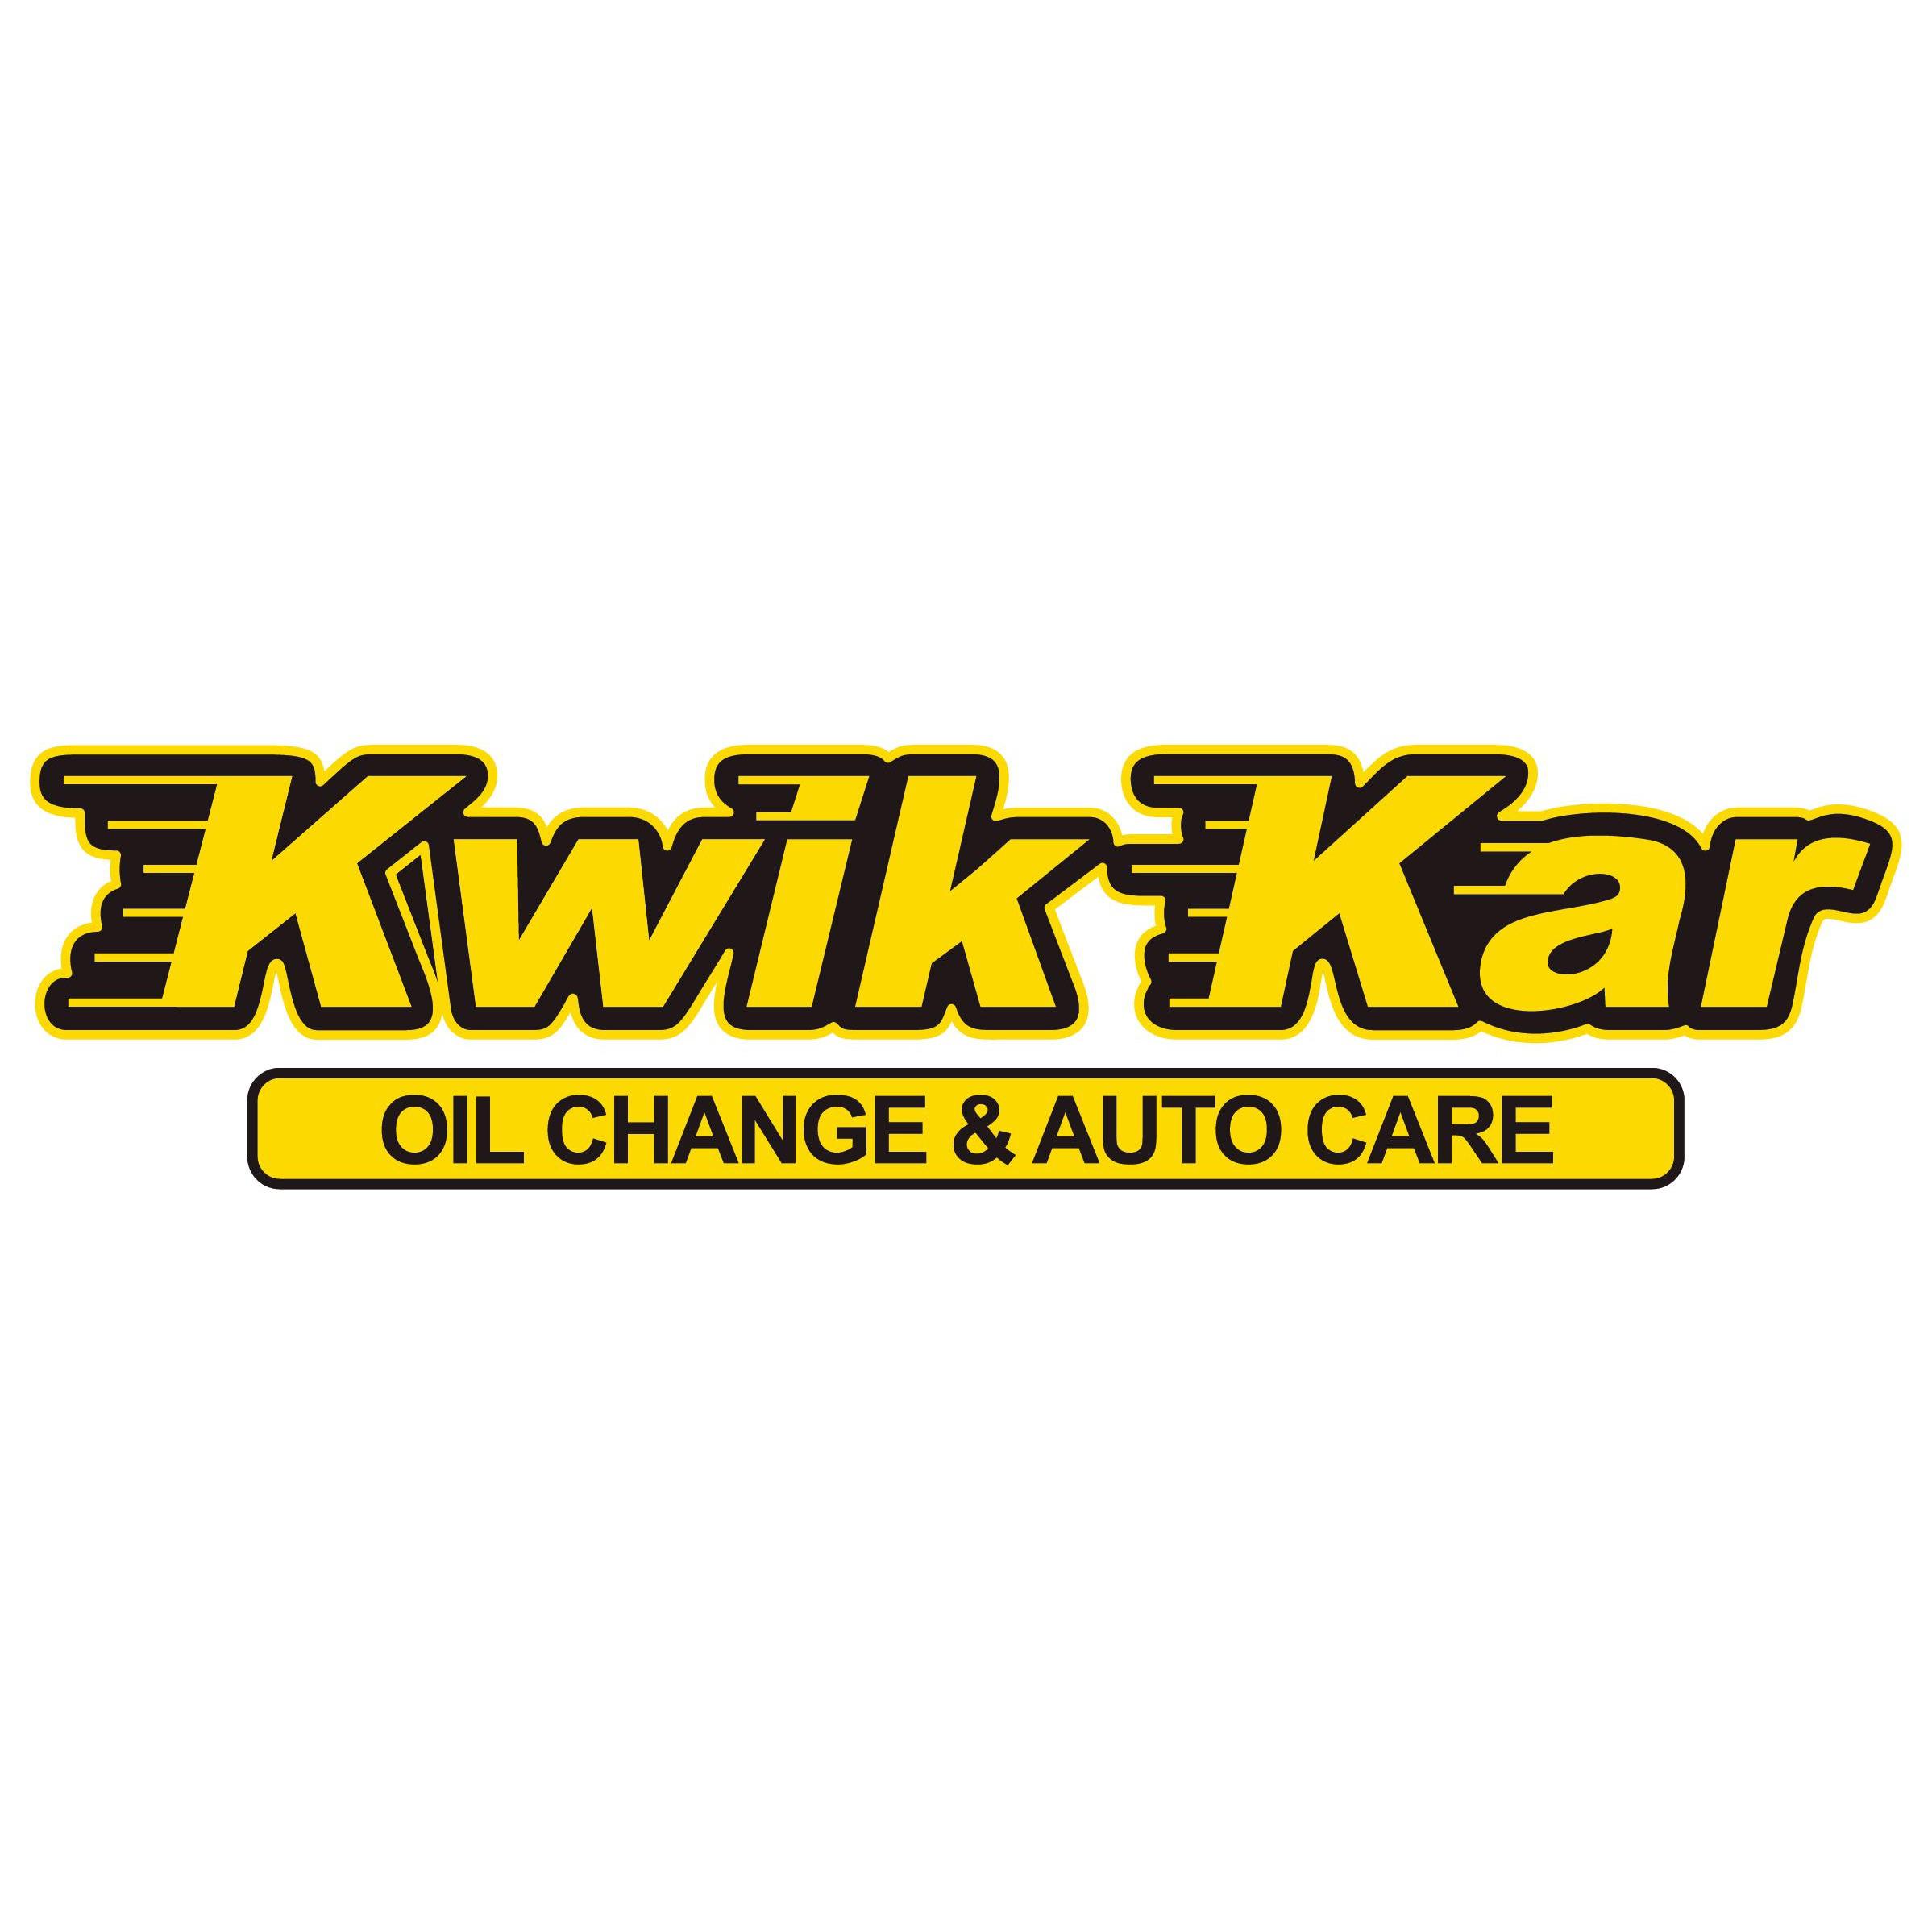 Kwik Kar Oil Change & Auto Care